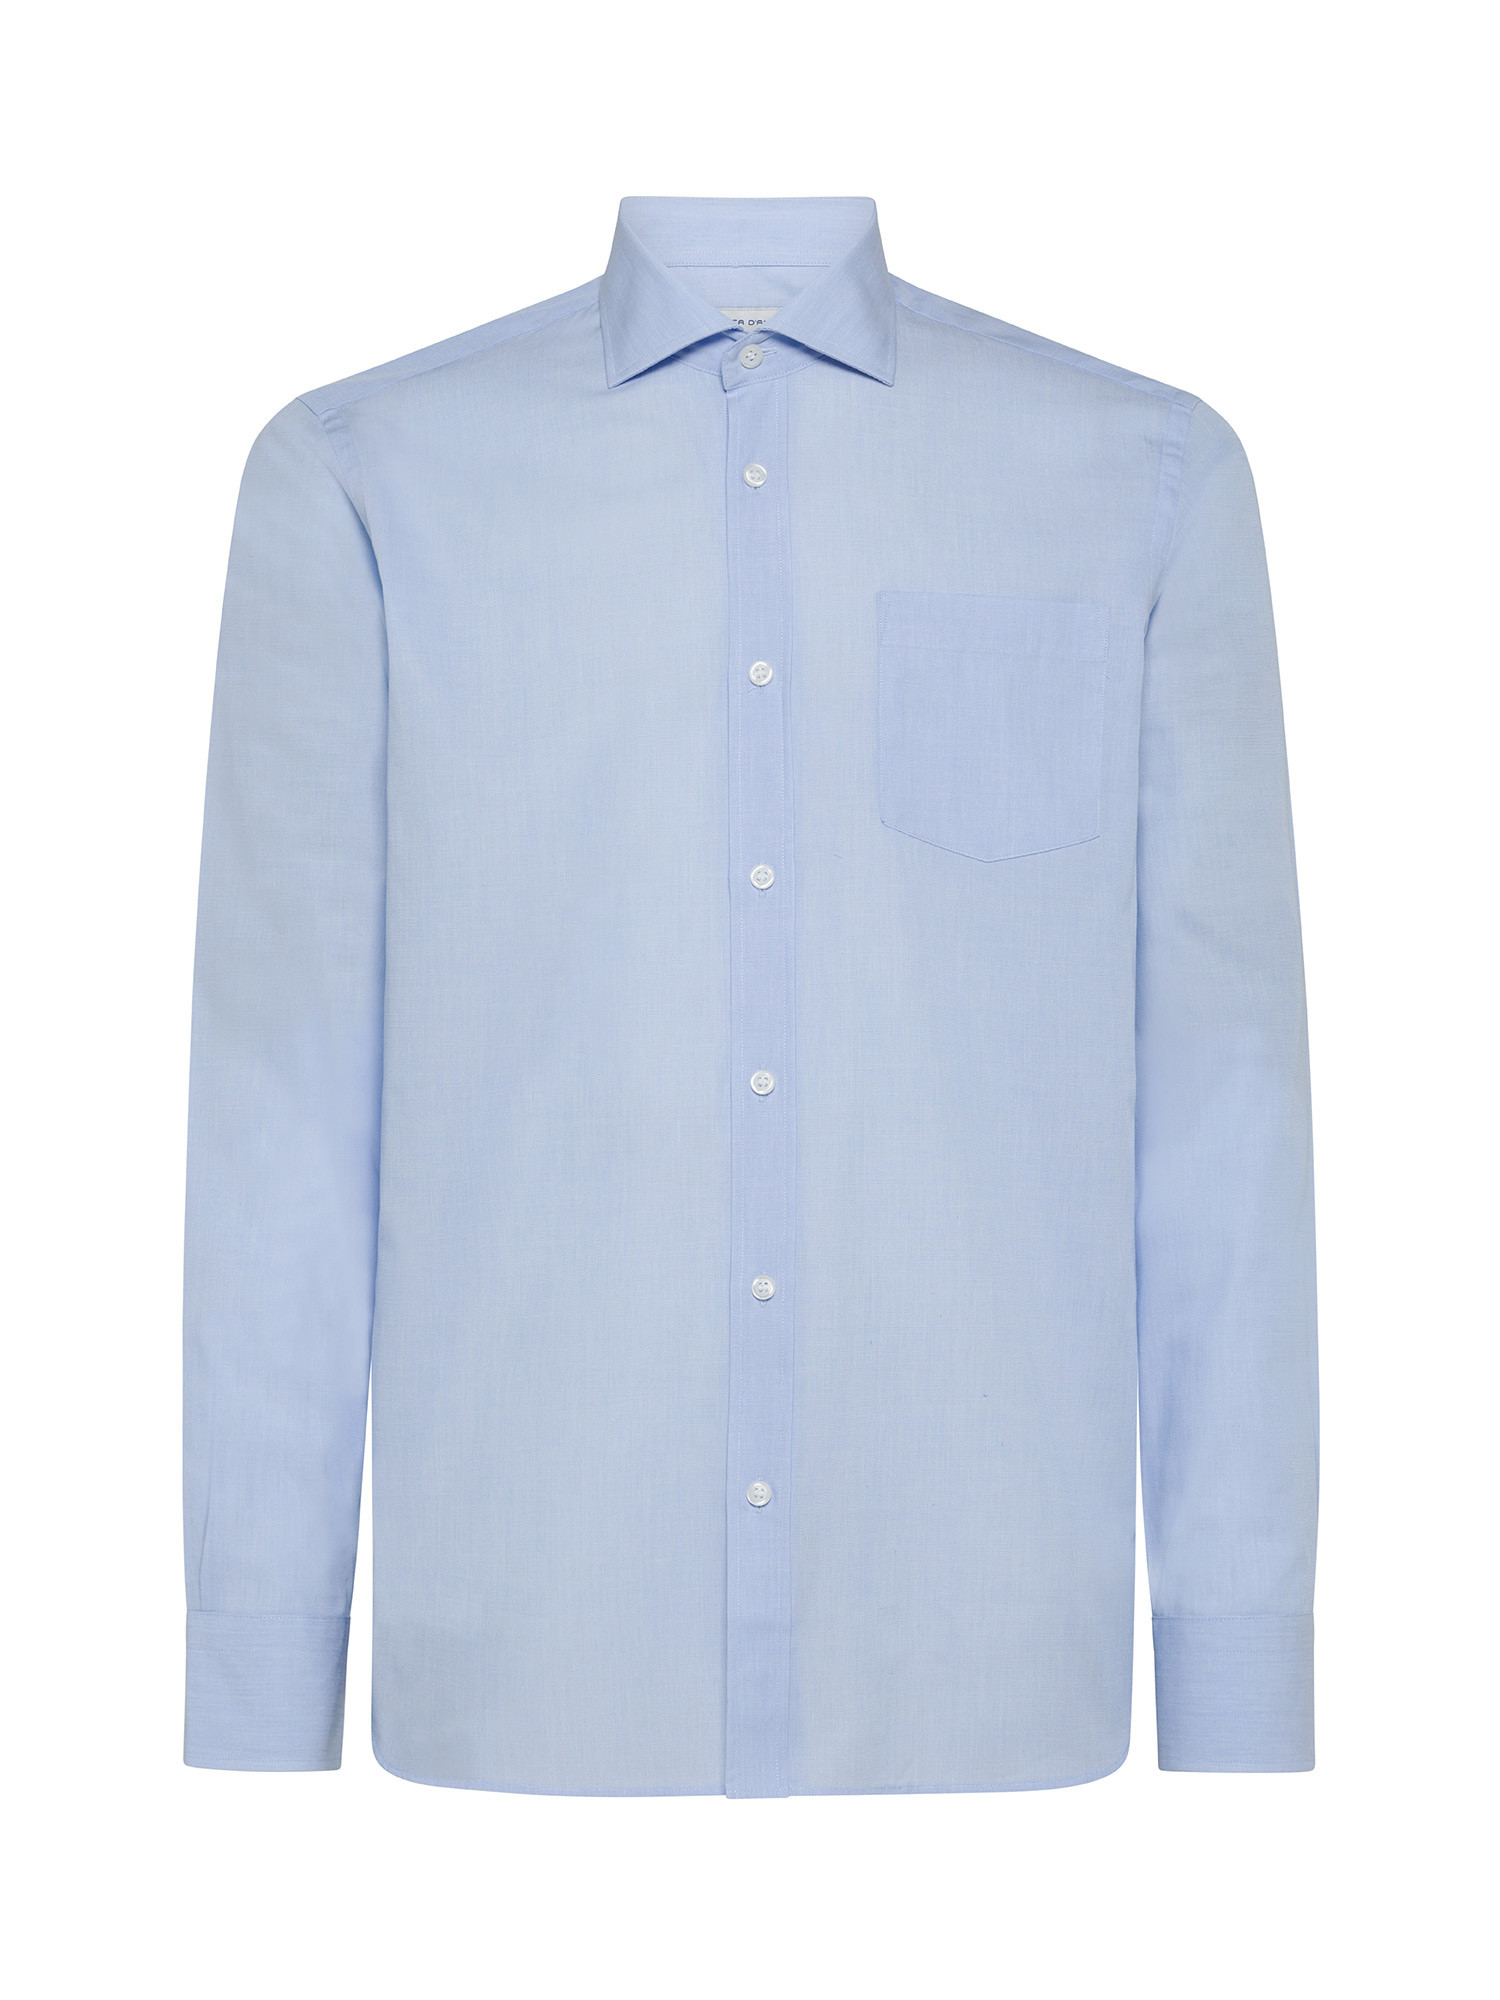 Luca D'Altieri - Camicia tailor fit in puro cotone, Azzurro, large image number 0